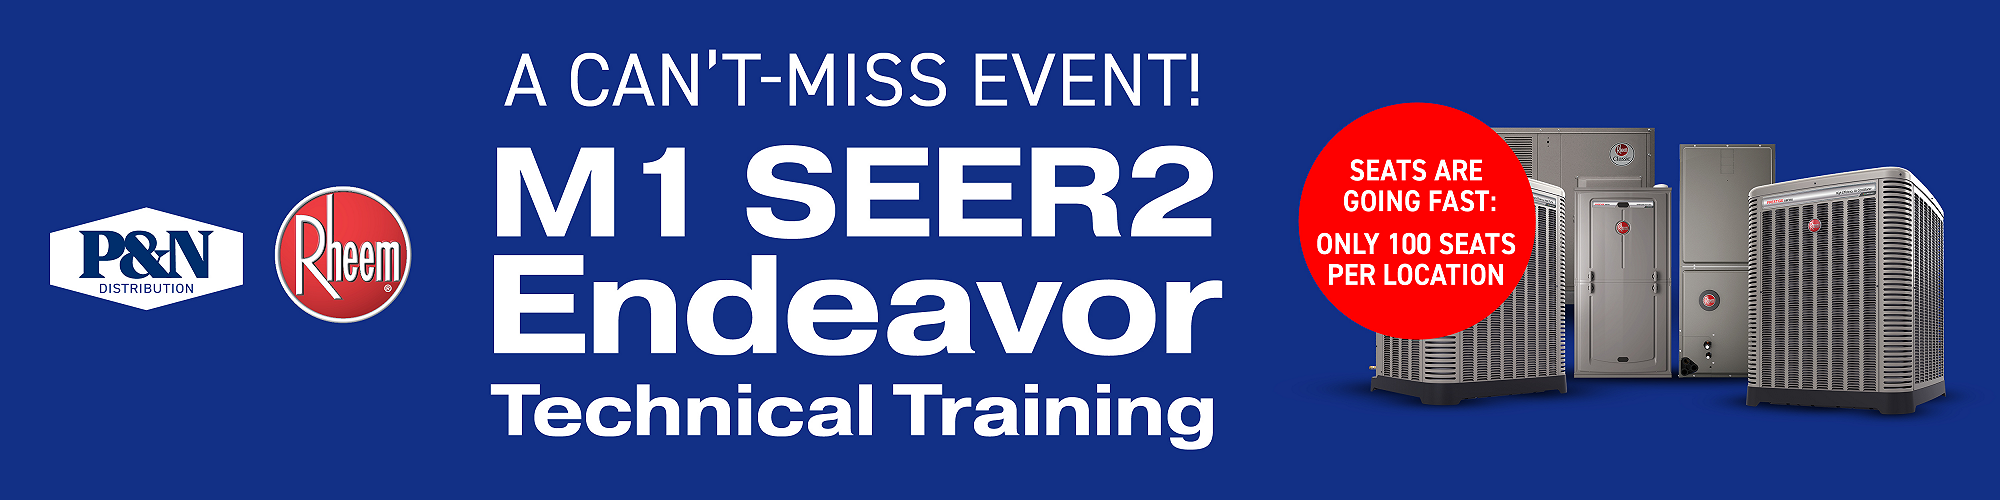 M1 SEER2 Technical Training